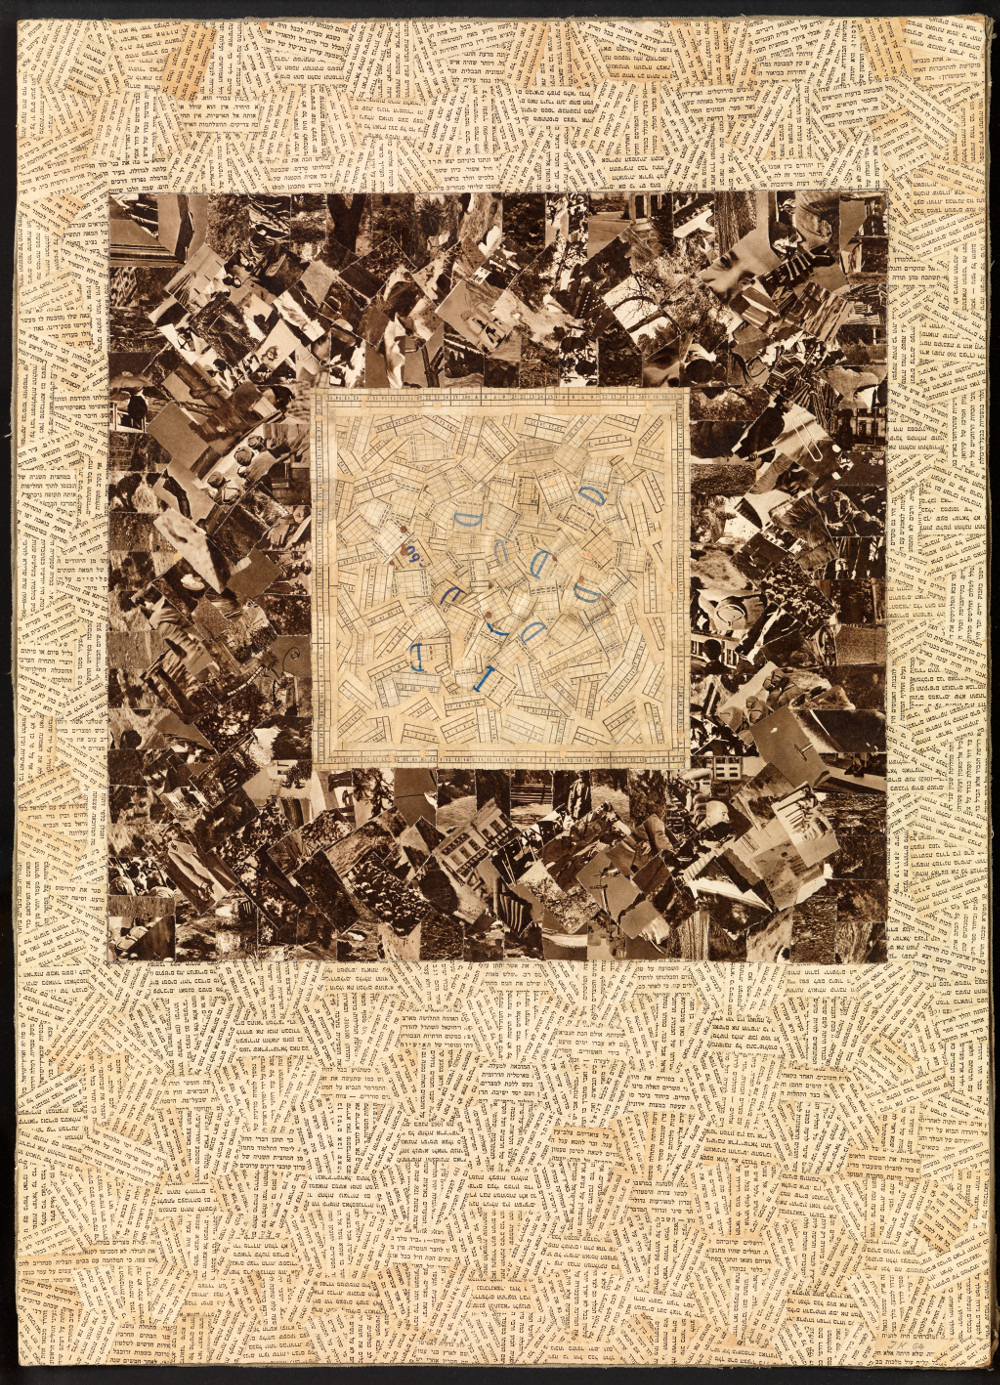 Jiri Kolar Listy a lìstky 1964 chiasmage 68x49 cm. Courtesy: Alessandro Casini